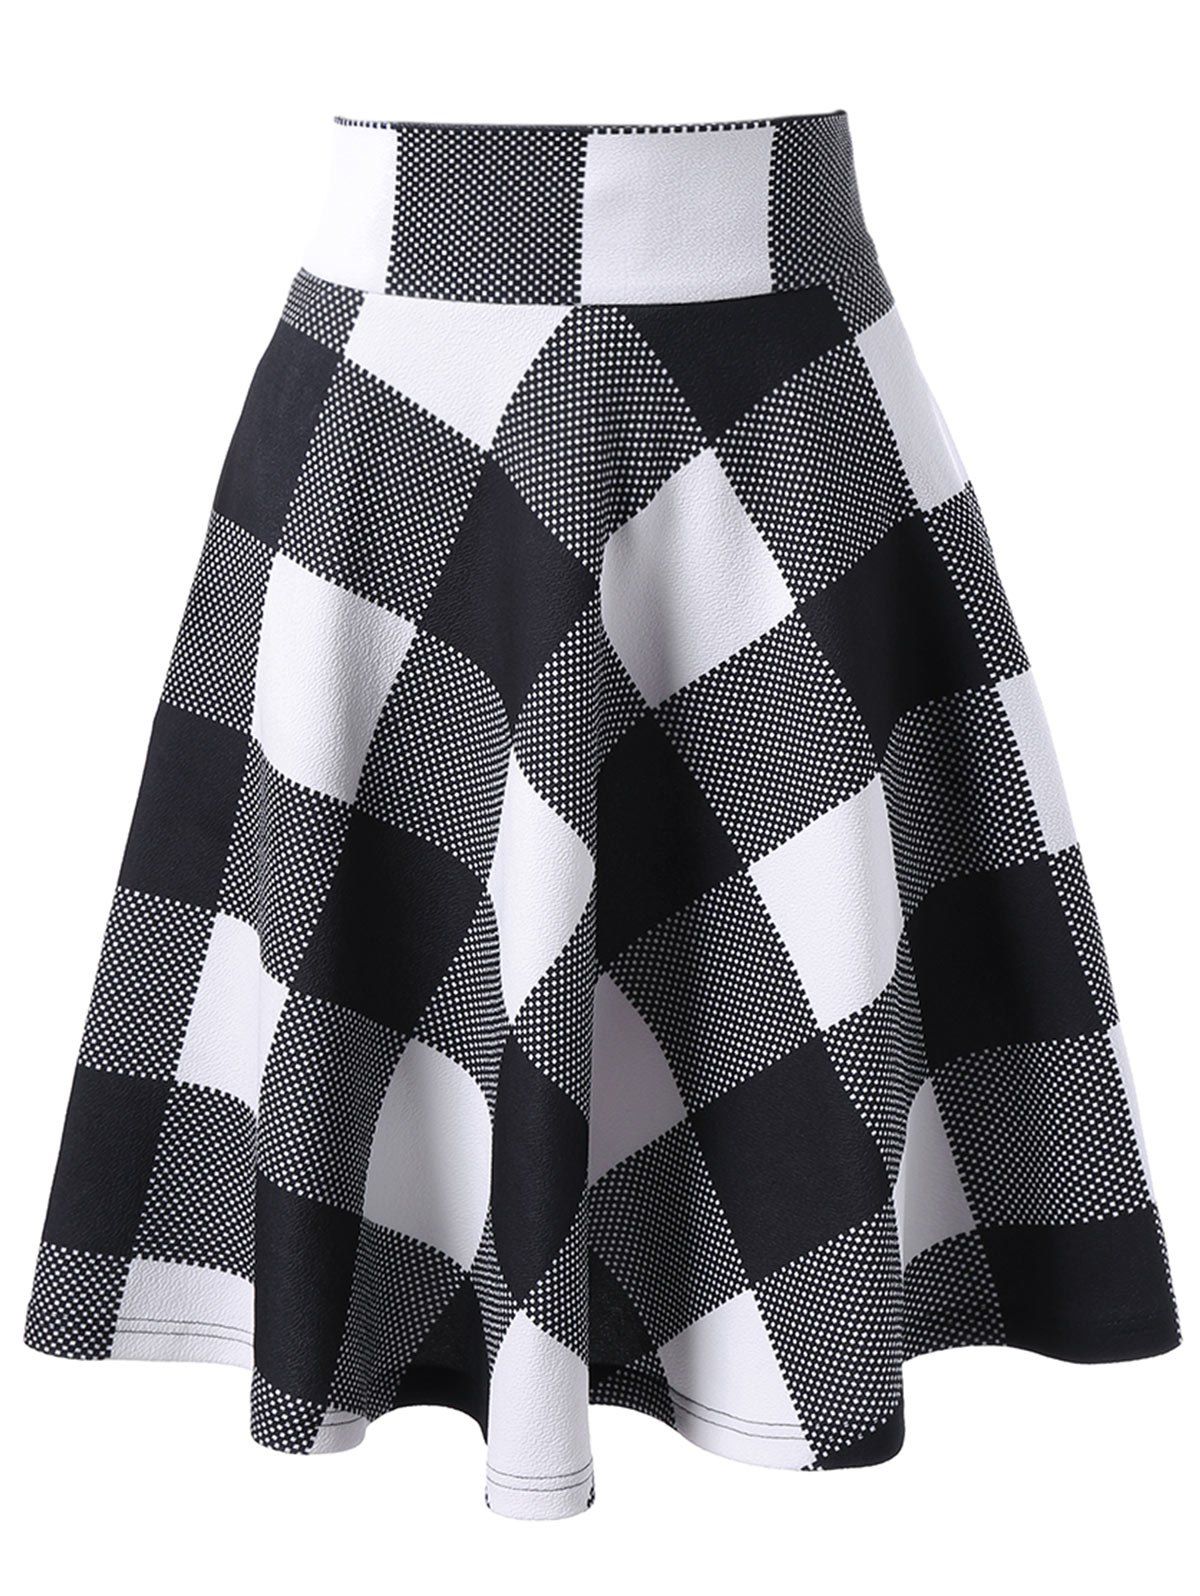 Zippered High Waisted Checked Skirt - WHITE/BLACK XL